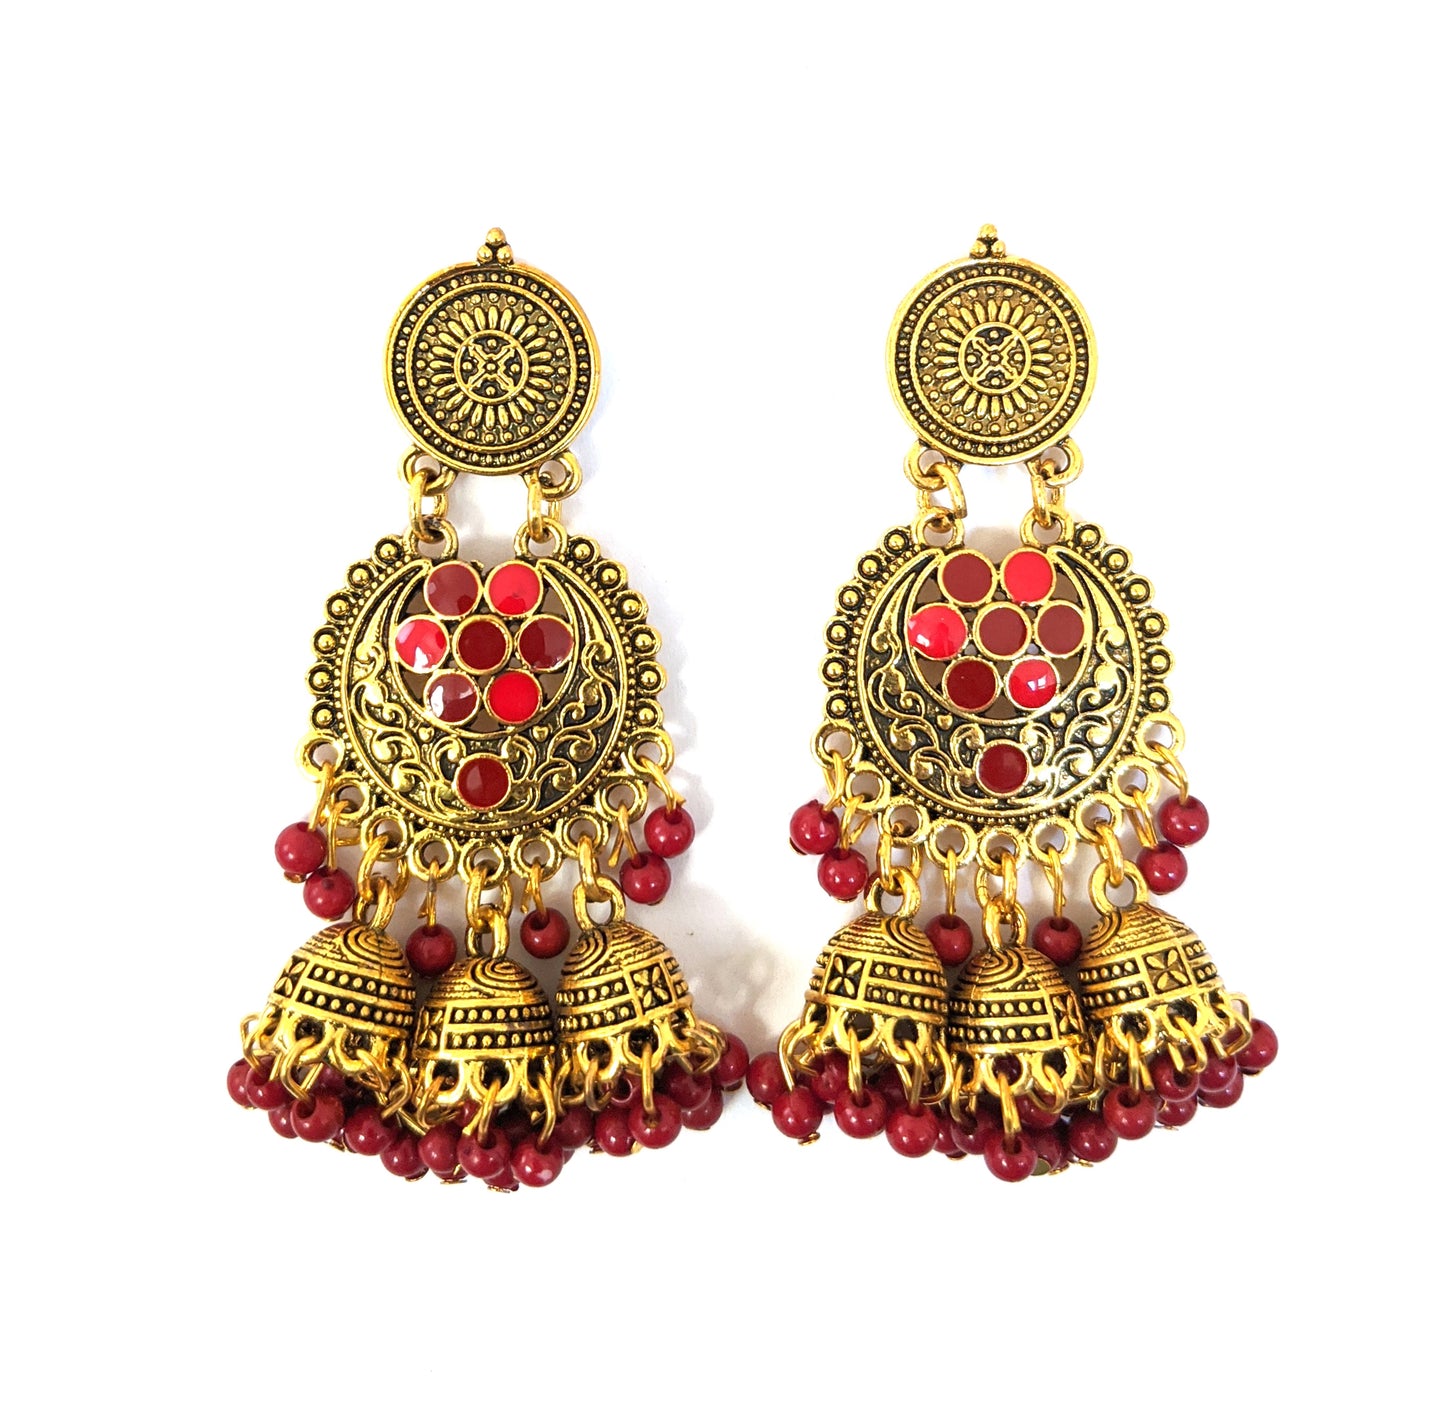 Antique gold finish enamel work triple jhumka earring - Simpliful